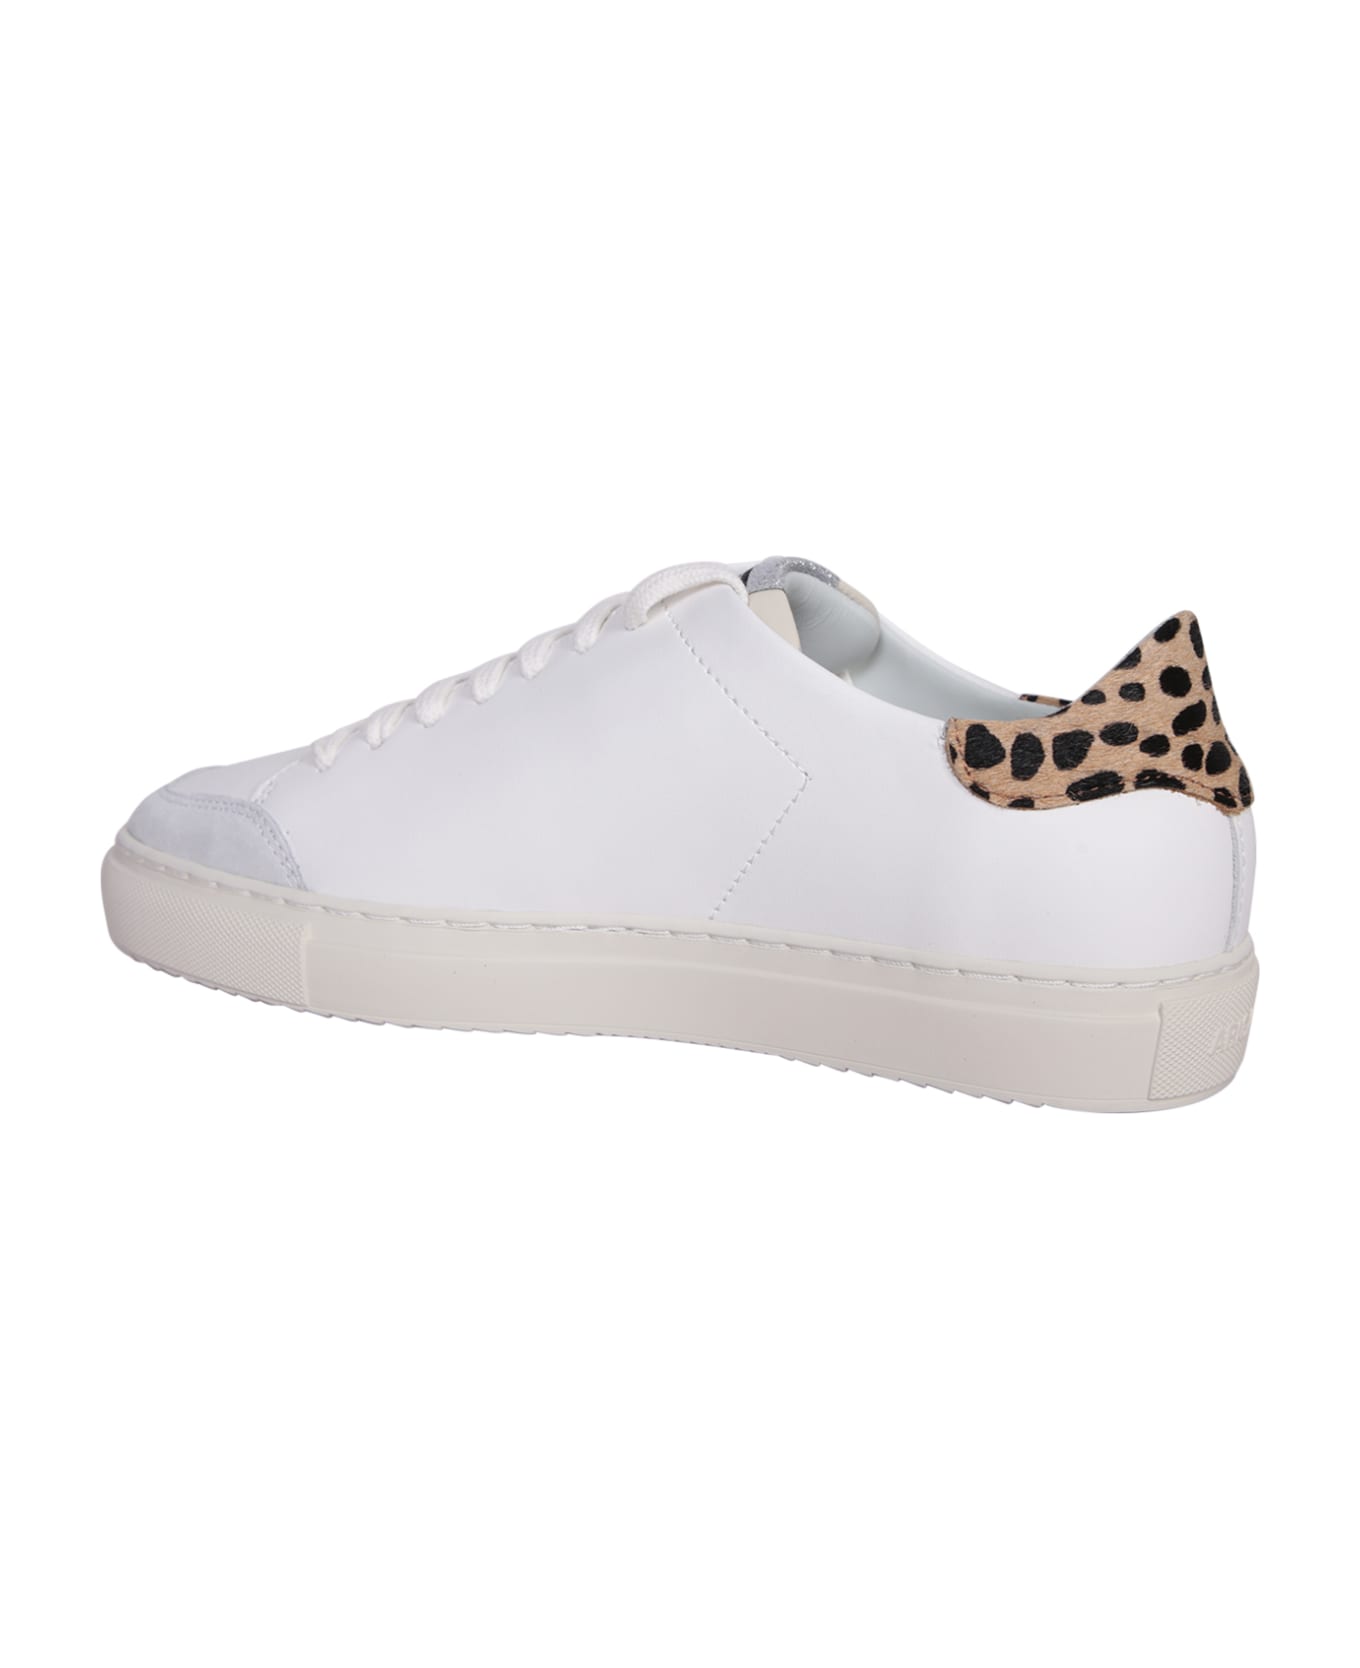 Axel Arigato Clean 90 Triple Leopard Sneakers - White